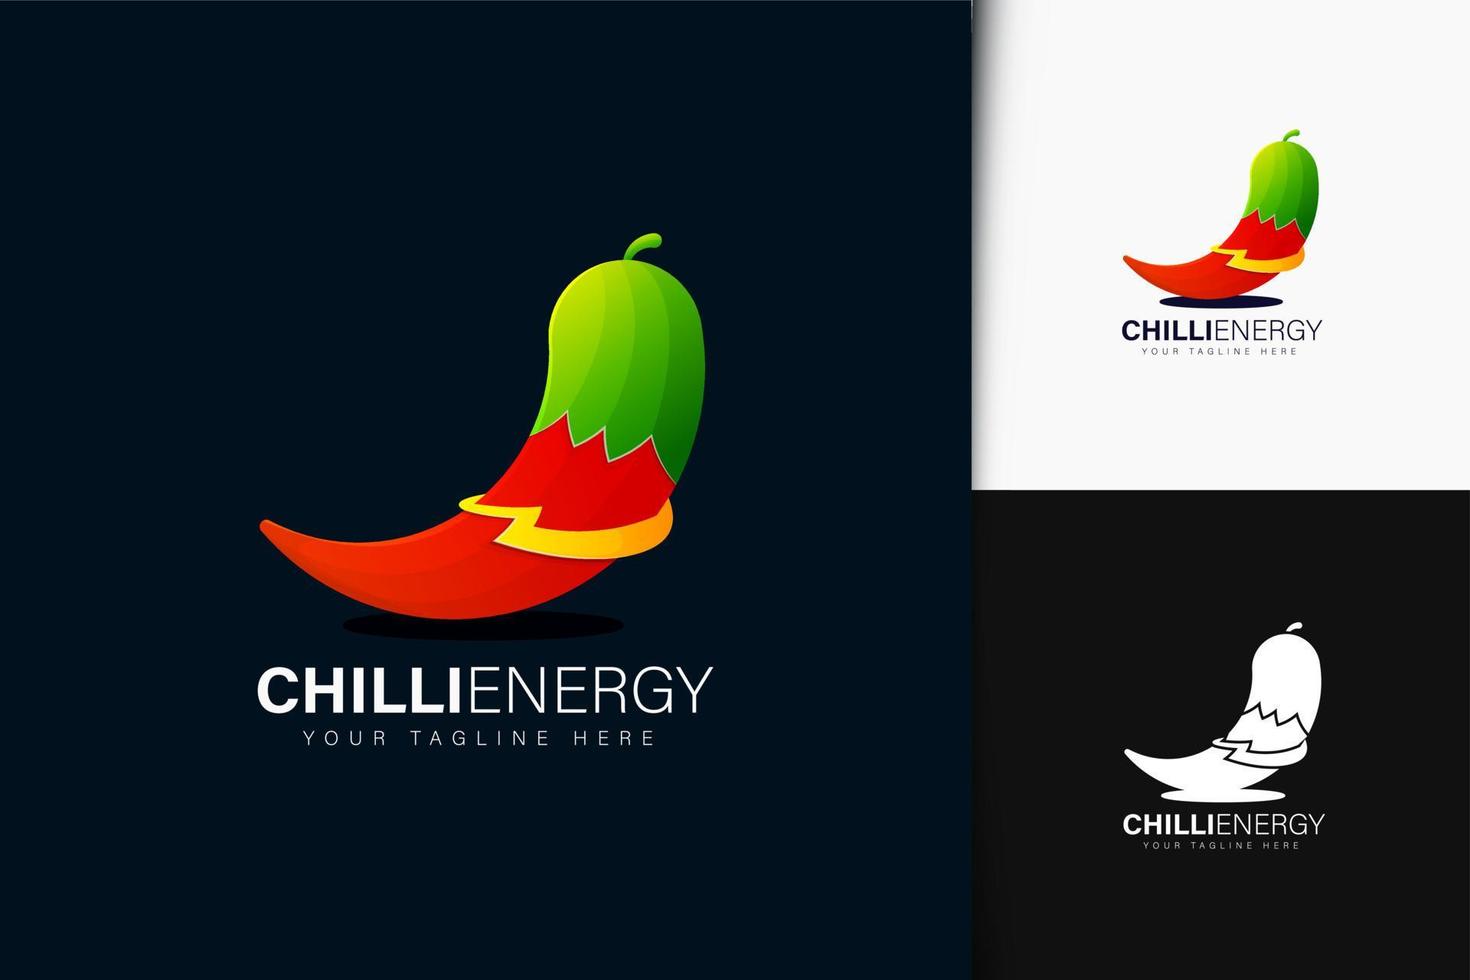 Chilli energy logo design with gradient vector